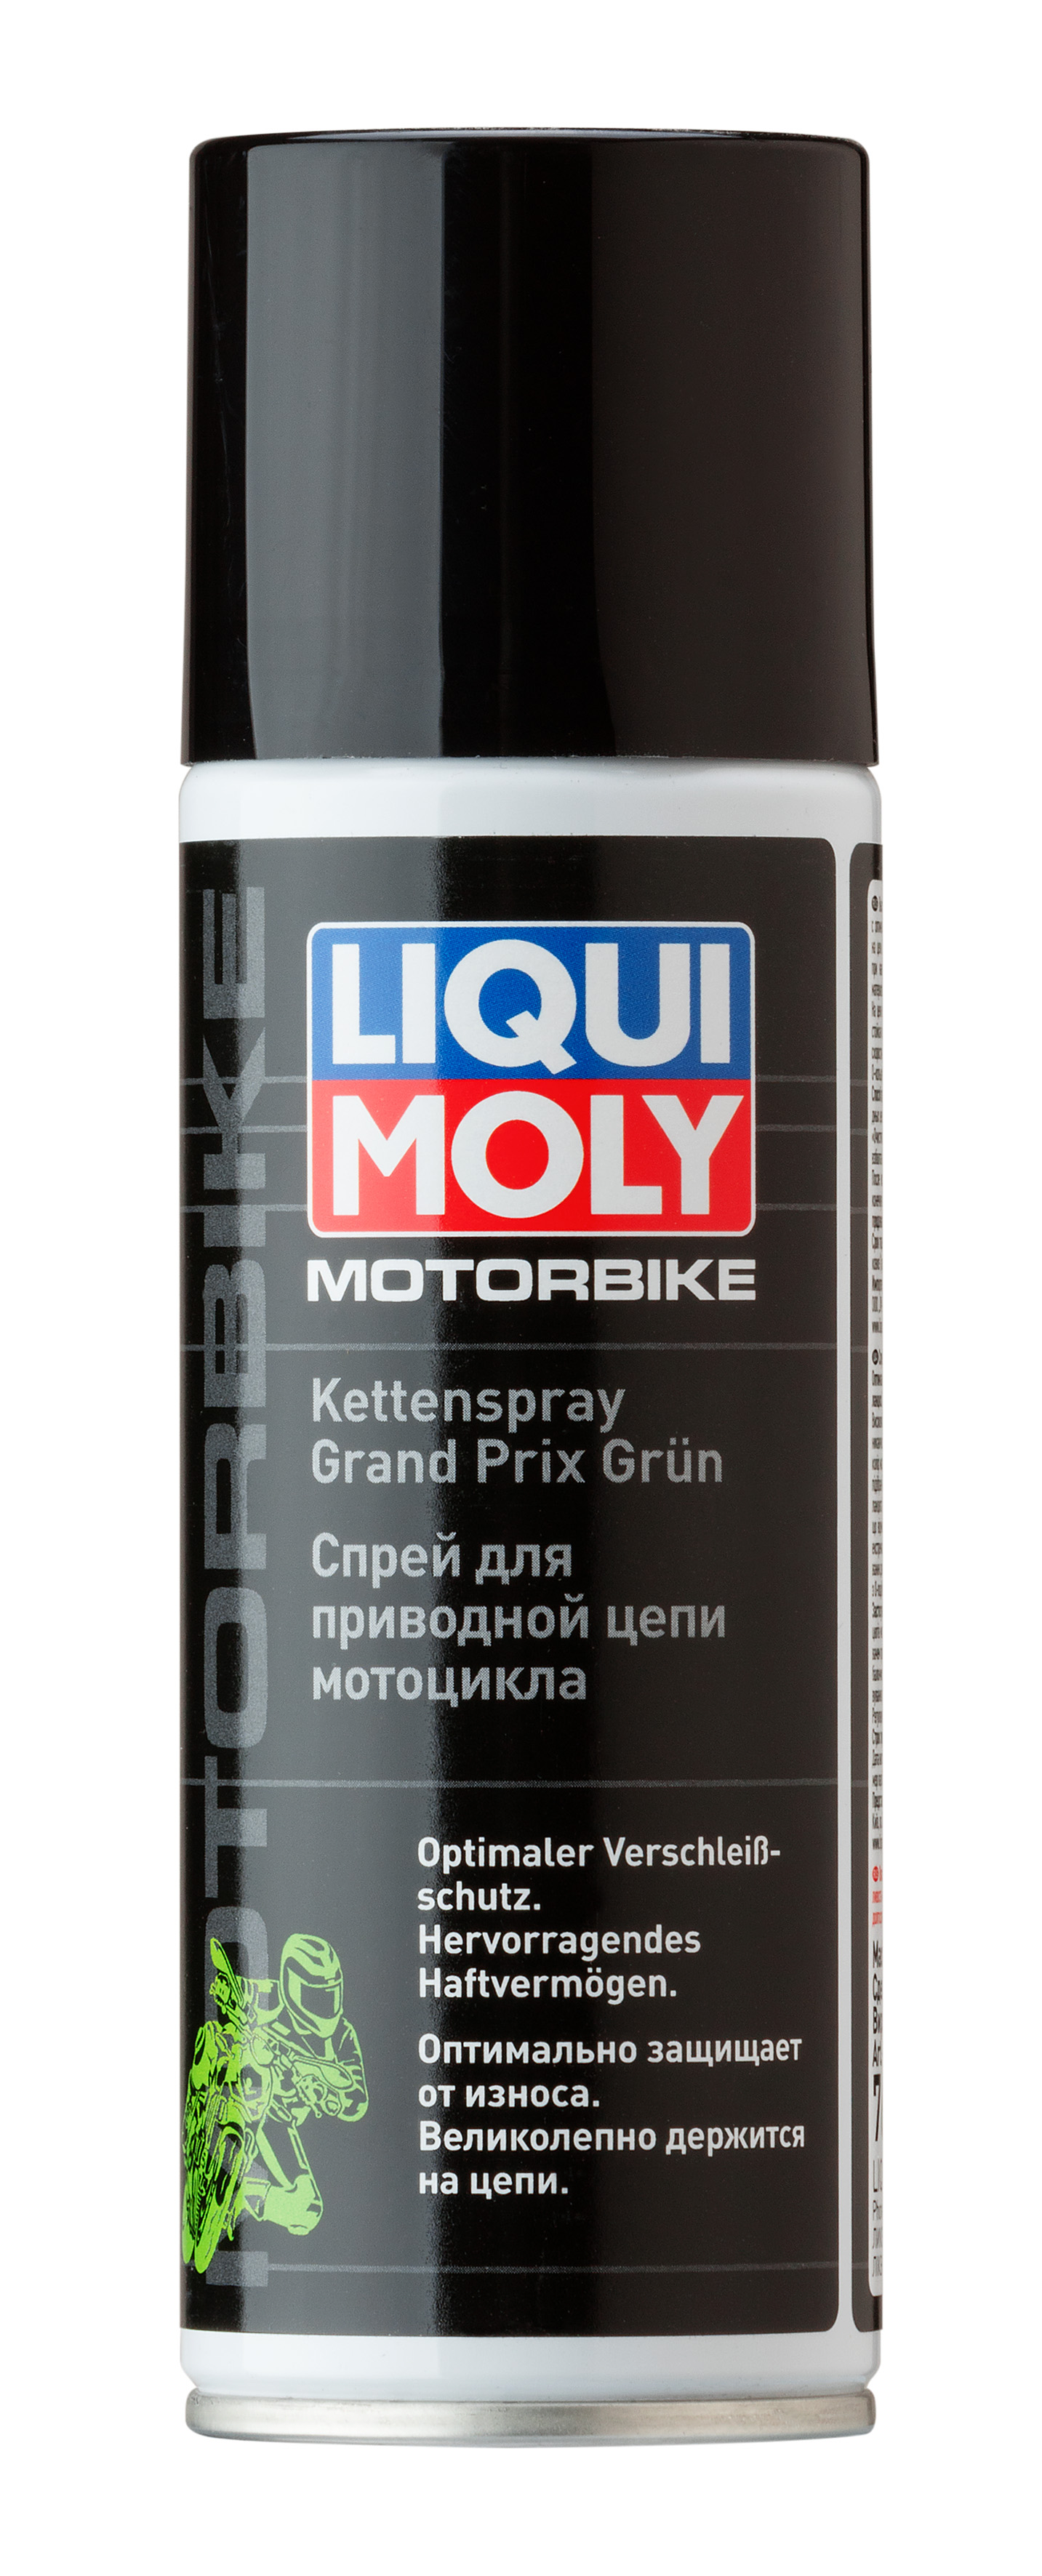 Спрей для приводной цепи мотоцикла LIQUI MOLY Motorrad Kettenspray Grand Prix Grun (0,2 кг)